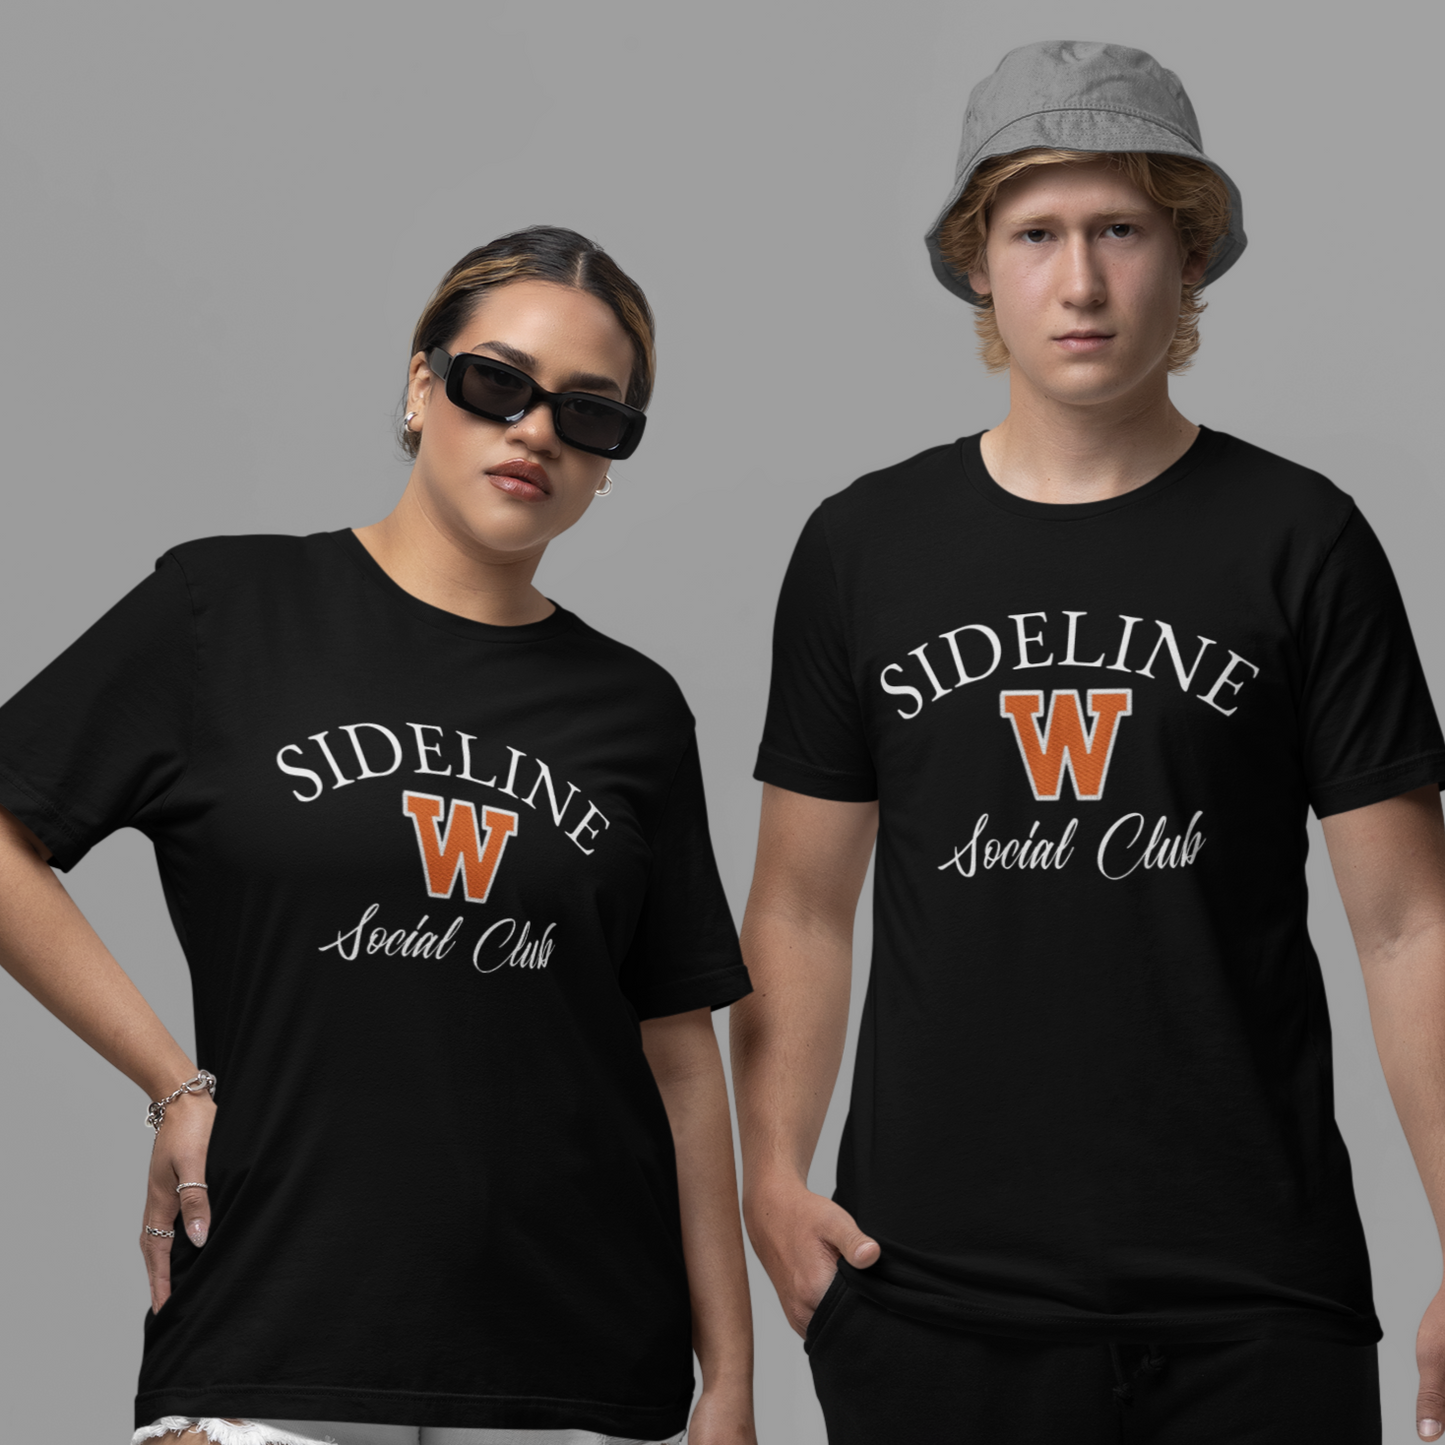 West De Pere Schools "Sideline Social Club" Black Tee Shirt